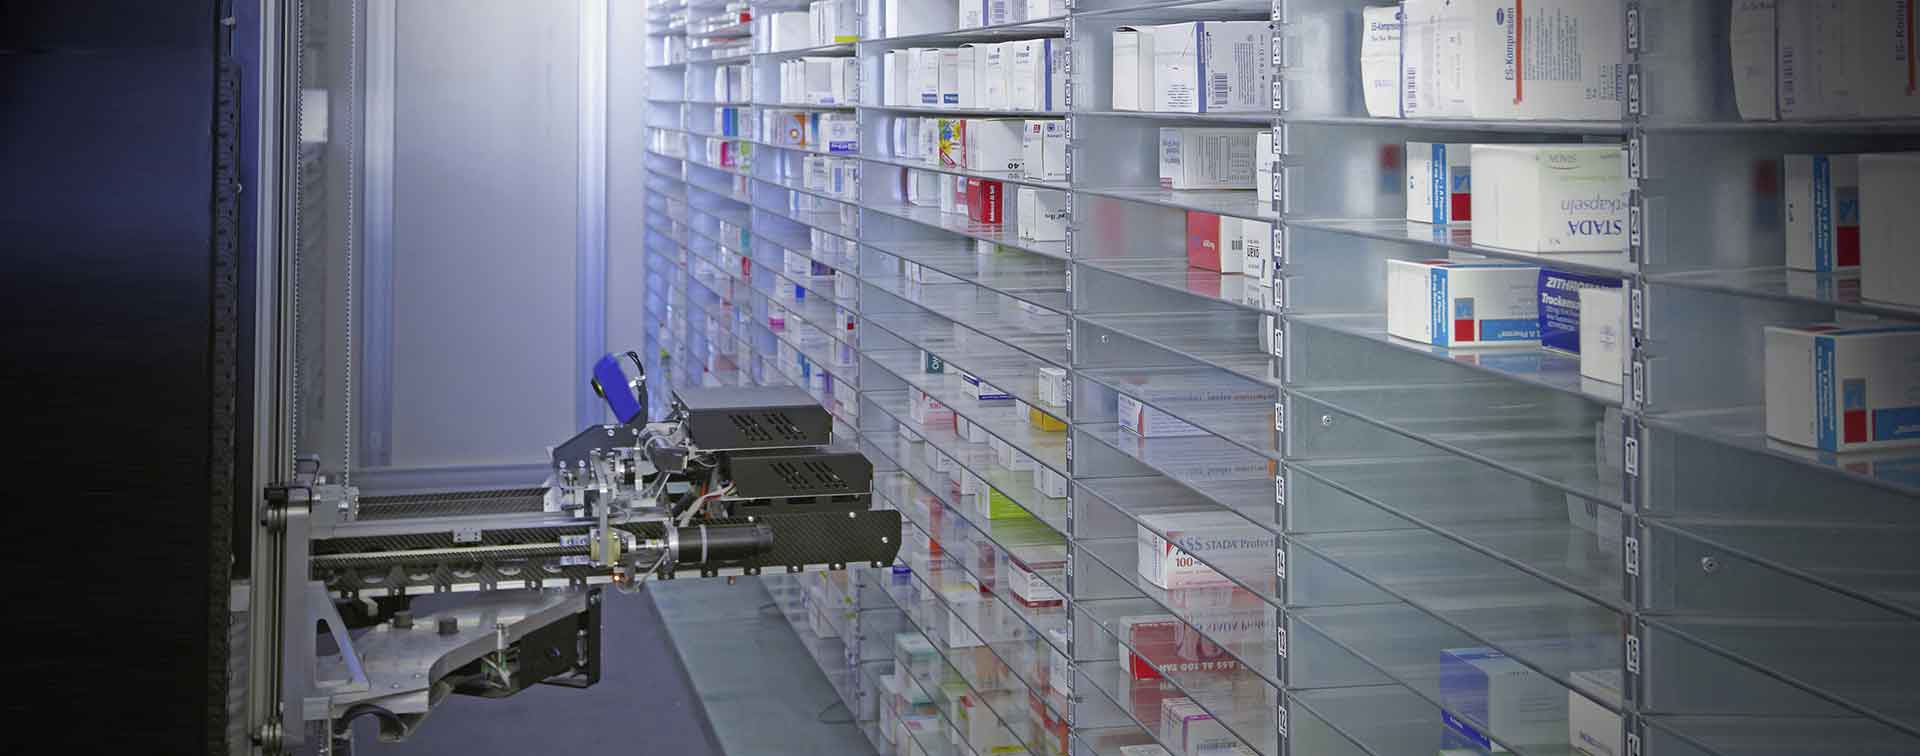 Automated Pharmacy